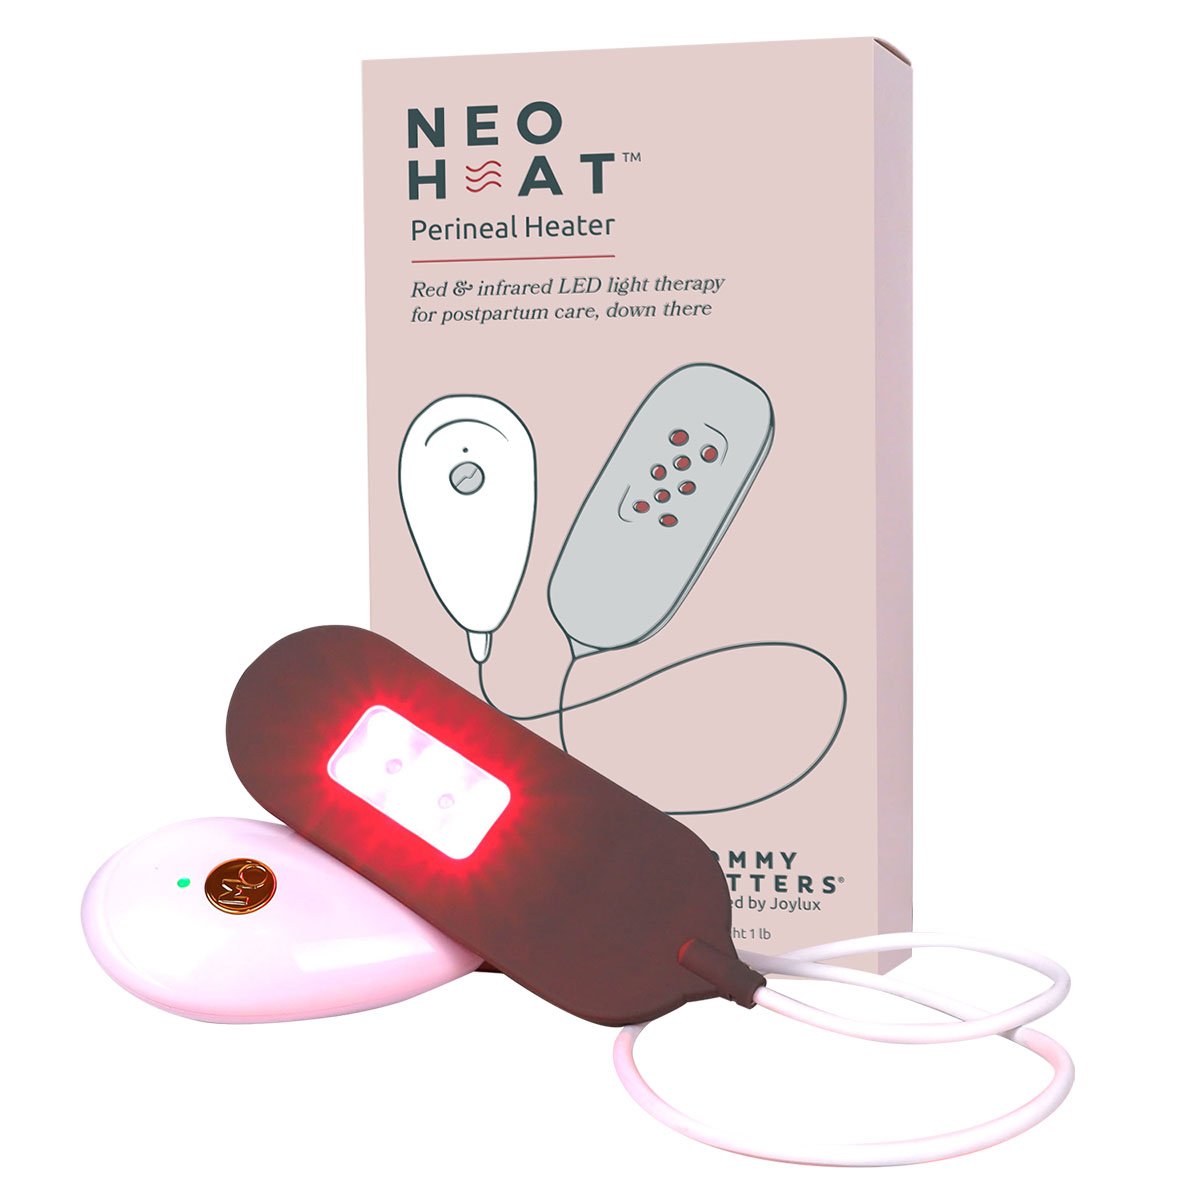 NeoHeat Perineal Healing Device